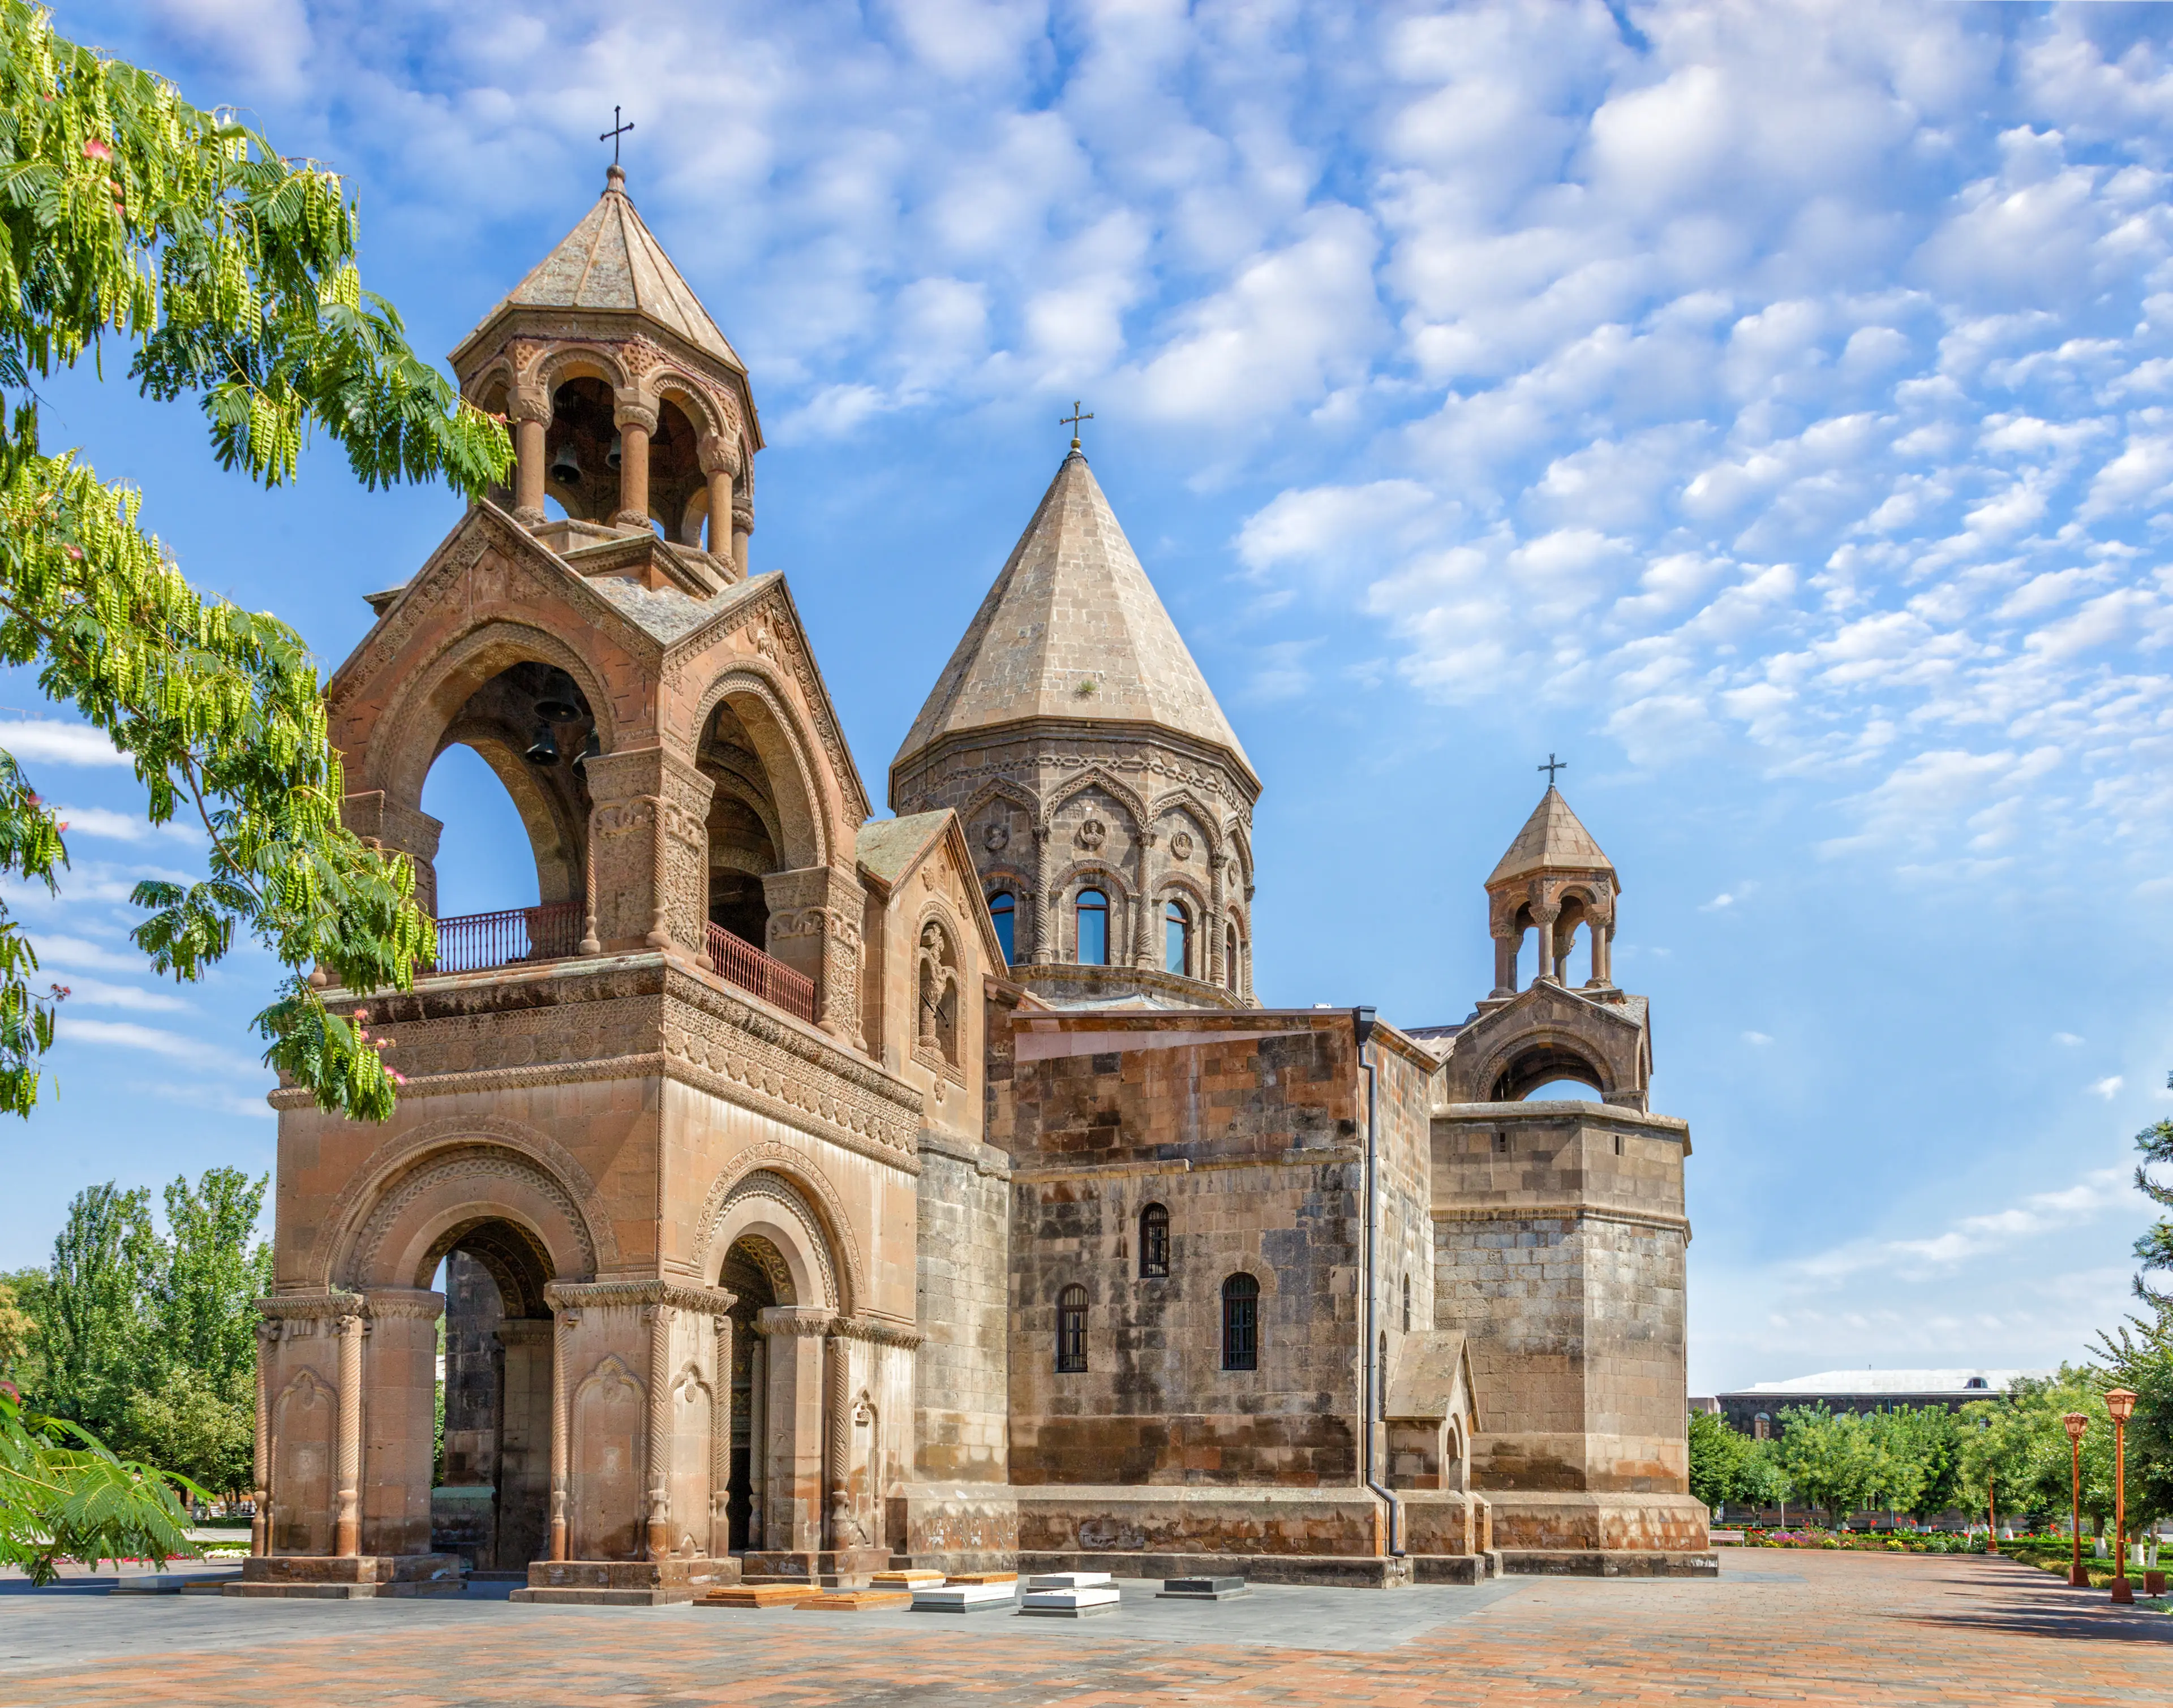 4-Day Exciting Adventure Itinerary in Yerevan, Armenia